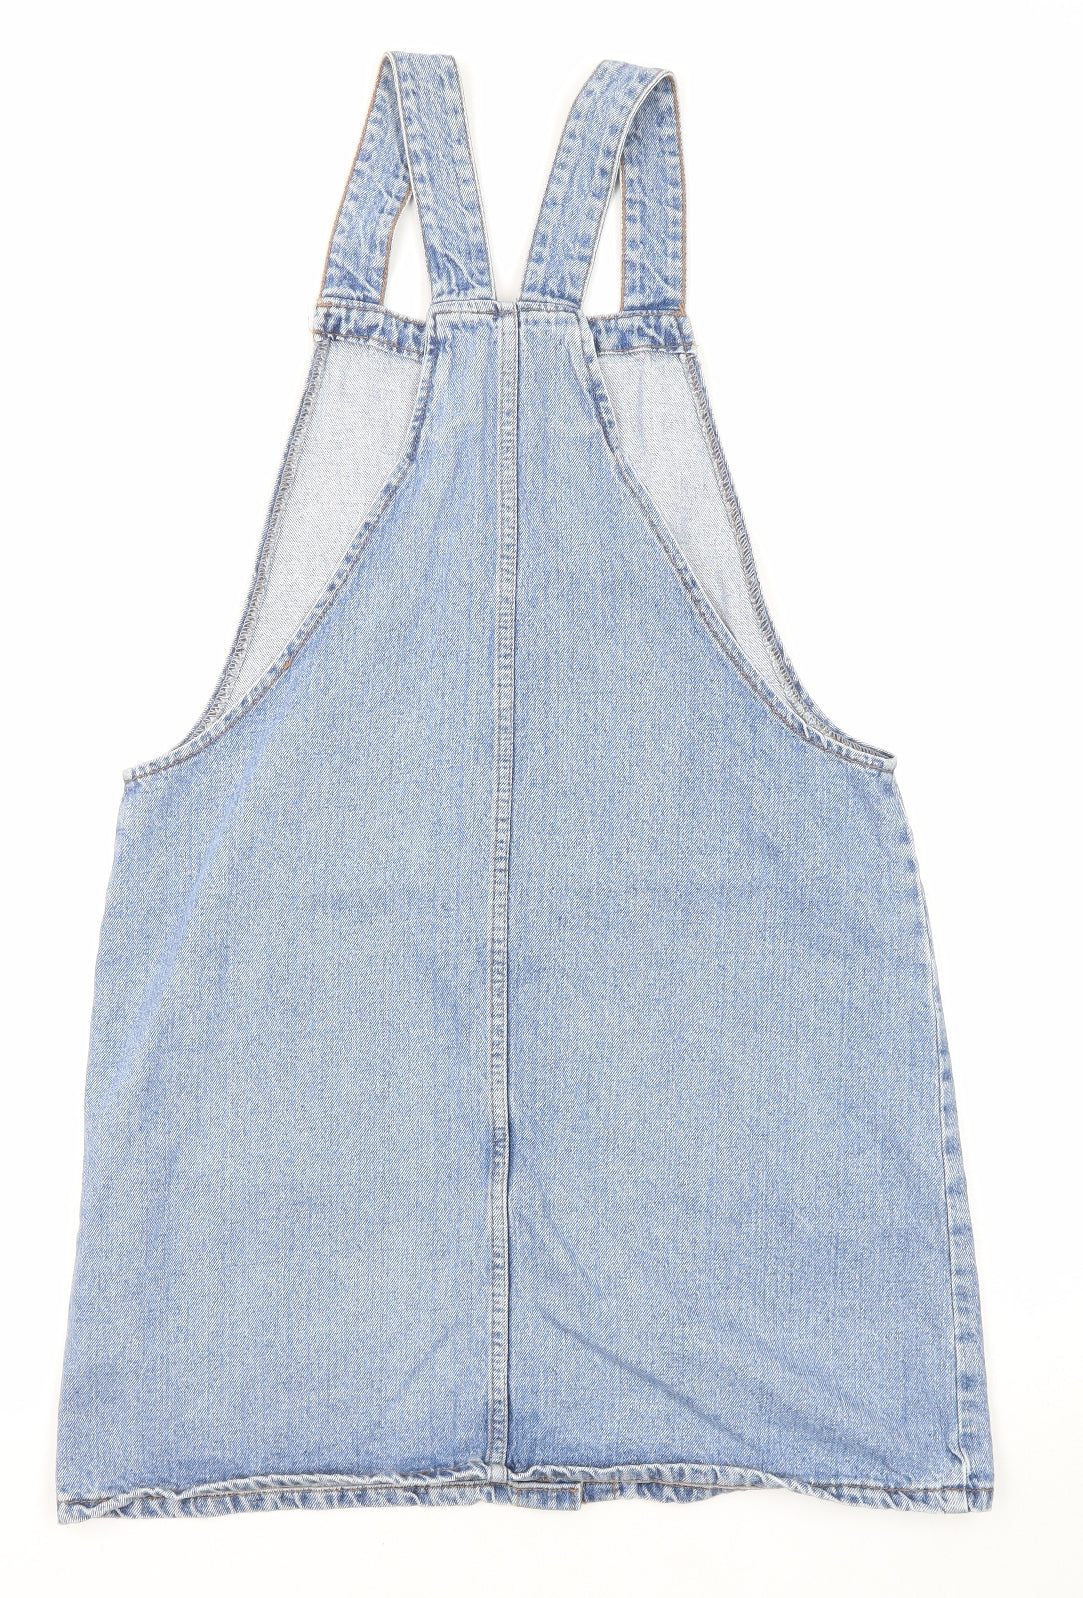 Denim & Co. Womens Blue Cotton Pinafore/Dungaree Dress Size 12 Square Neck Button